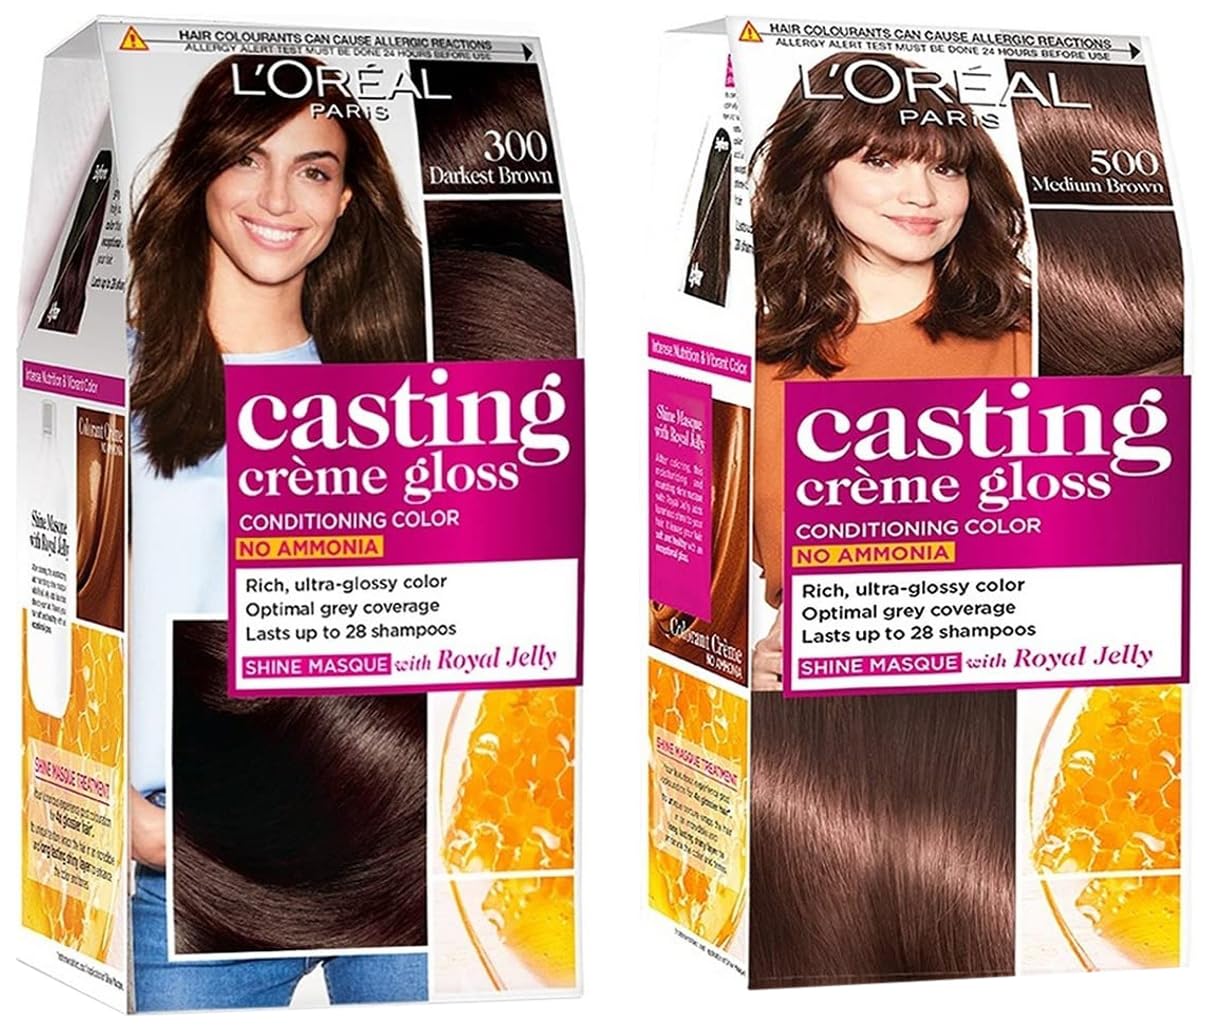 L'Oreal Paris Casting Creme Gloss Hair Color, Medium Brown 500 and Casting Creme Gloss Hair Color, Darkest Brown 300, 87.5g+72ml